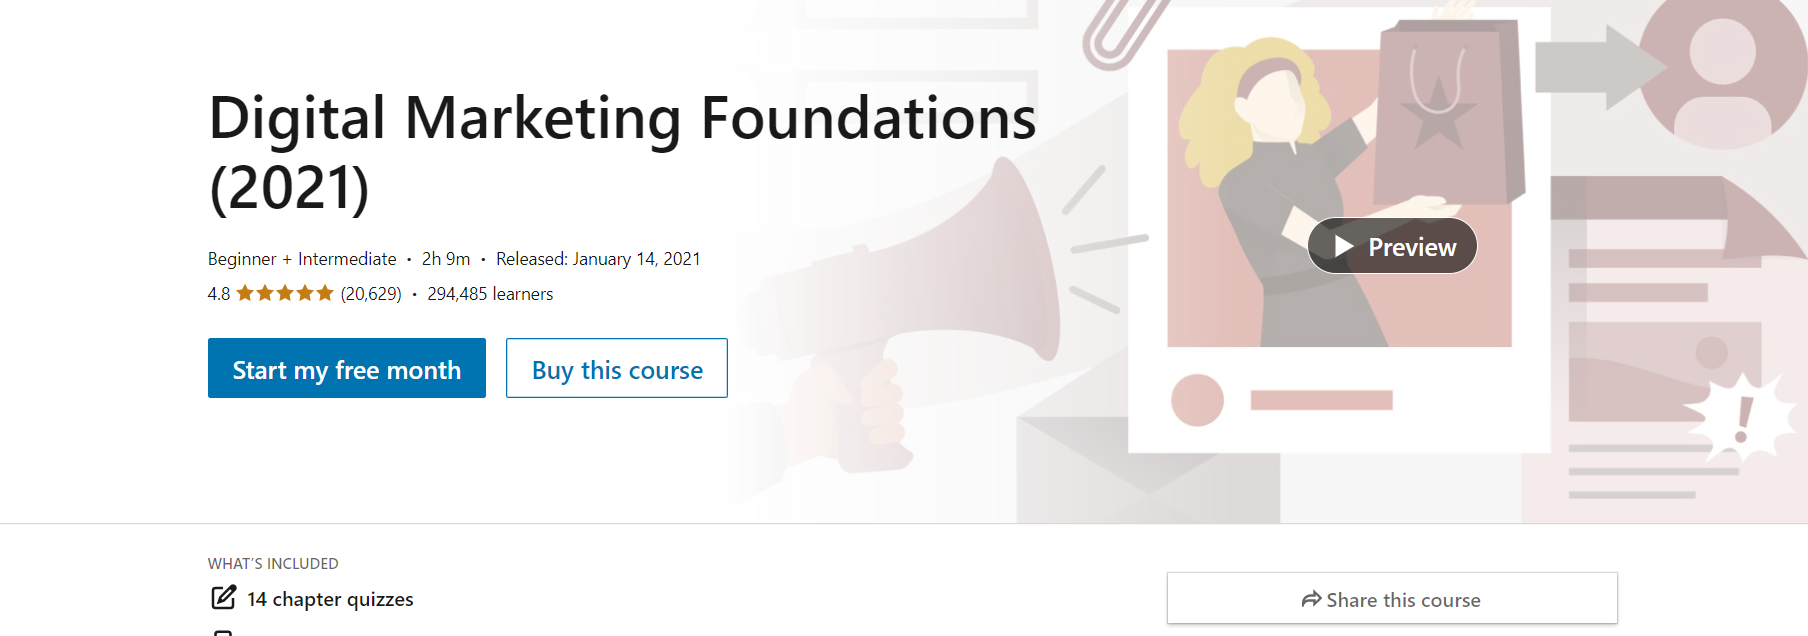 LinkedIn Learning Digital Marketing Specialist Course